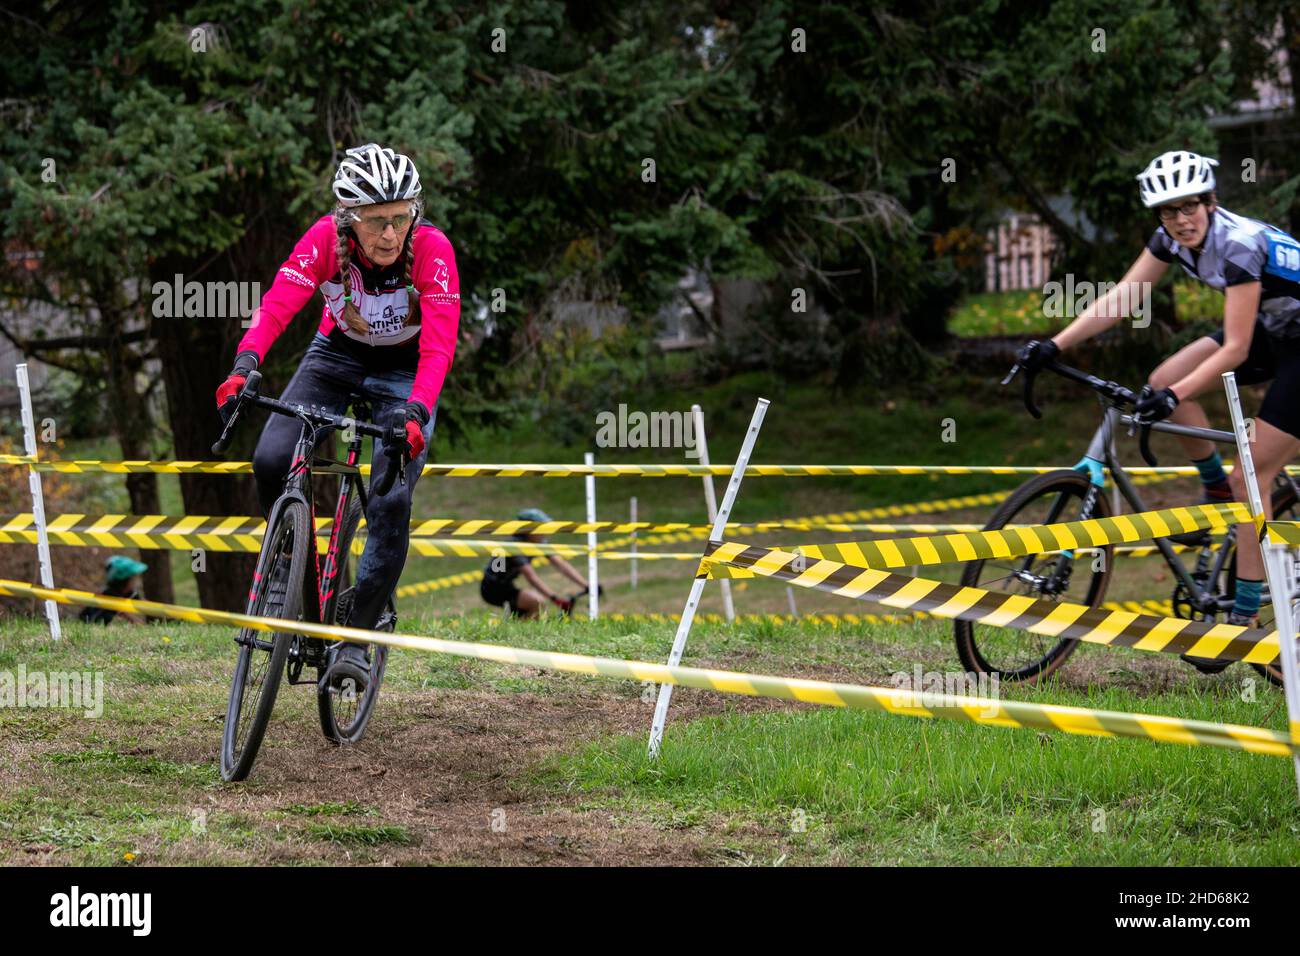 WA20598-00....WASHINGTON - Woman's cyclocross race. MR# S1 Stock Photo